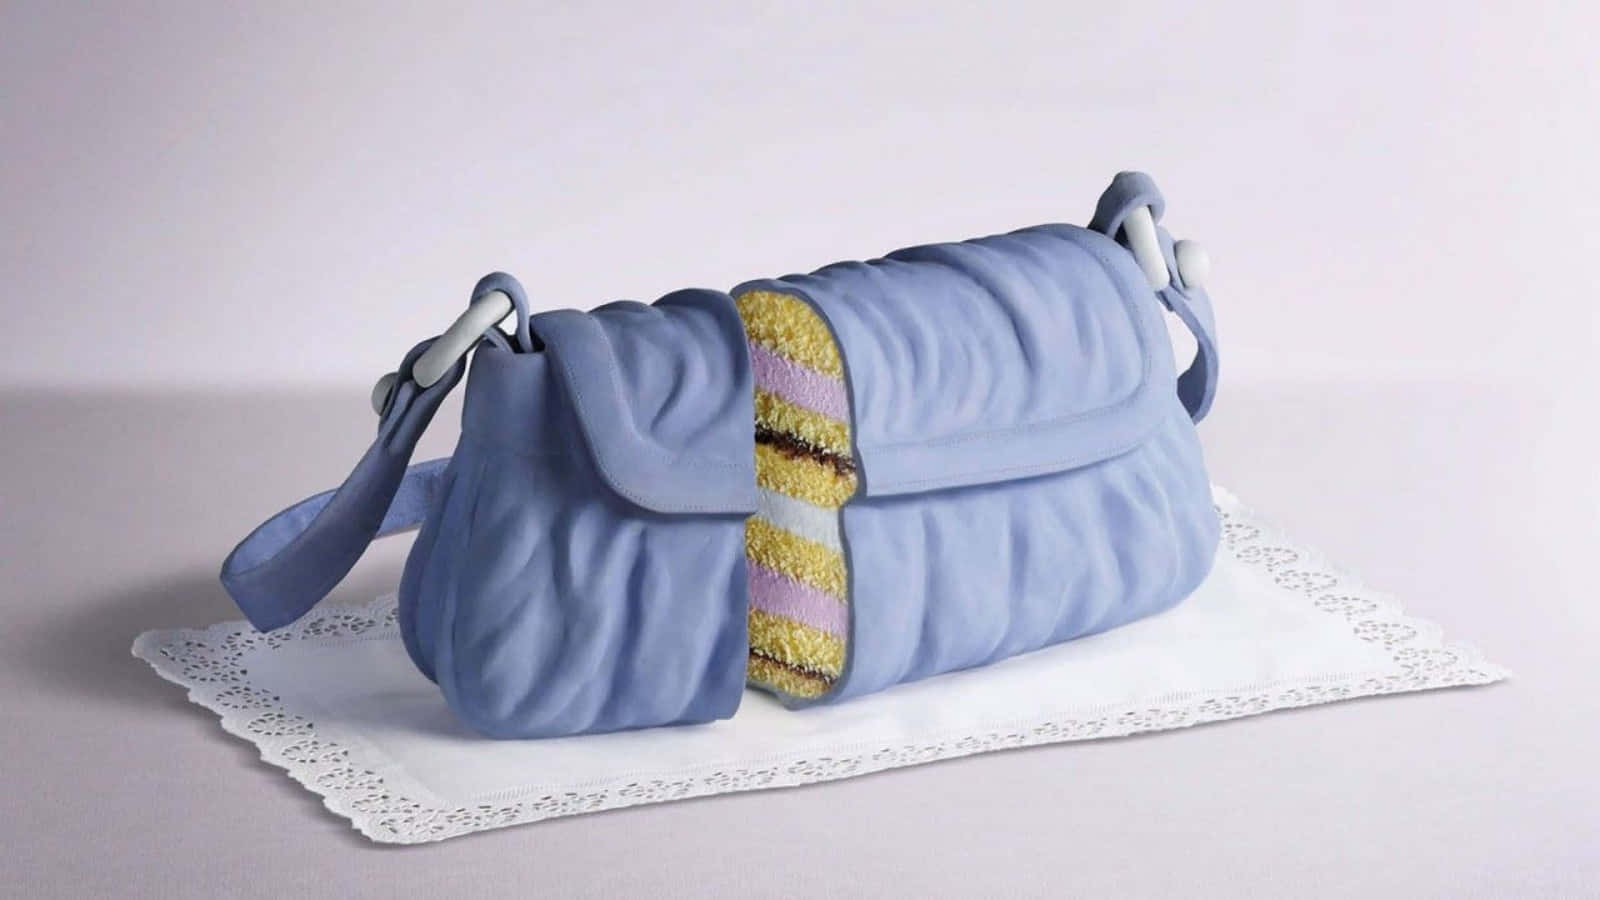 A Blue Purse Cake On A White Tablecloth